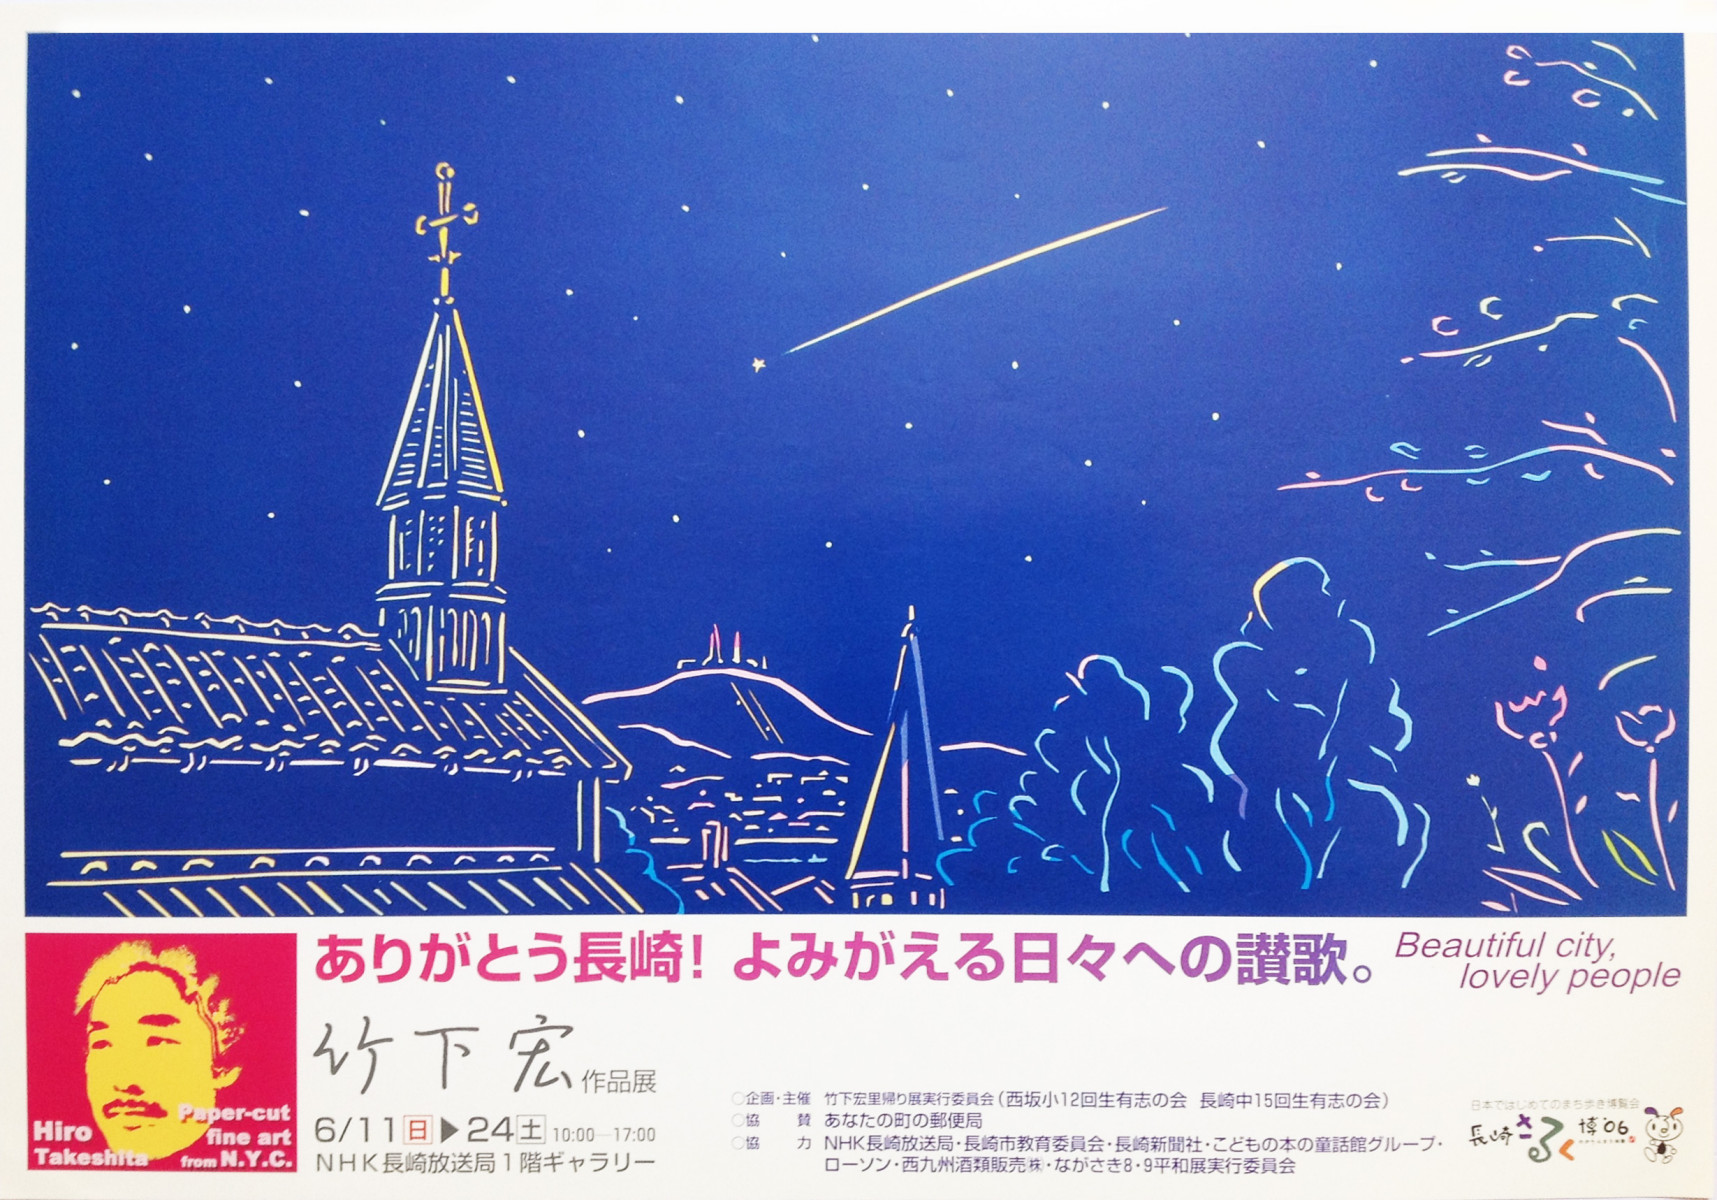  : Posters/cards : HIRO TAKESHITA - ARTIST